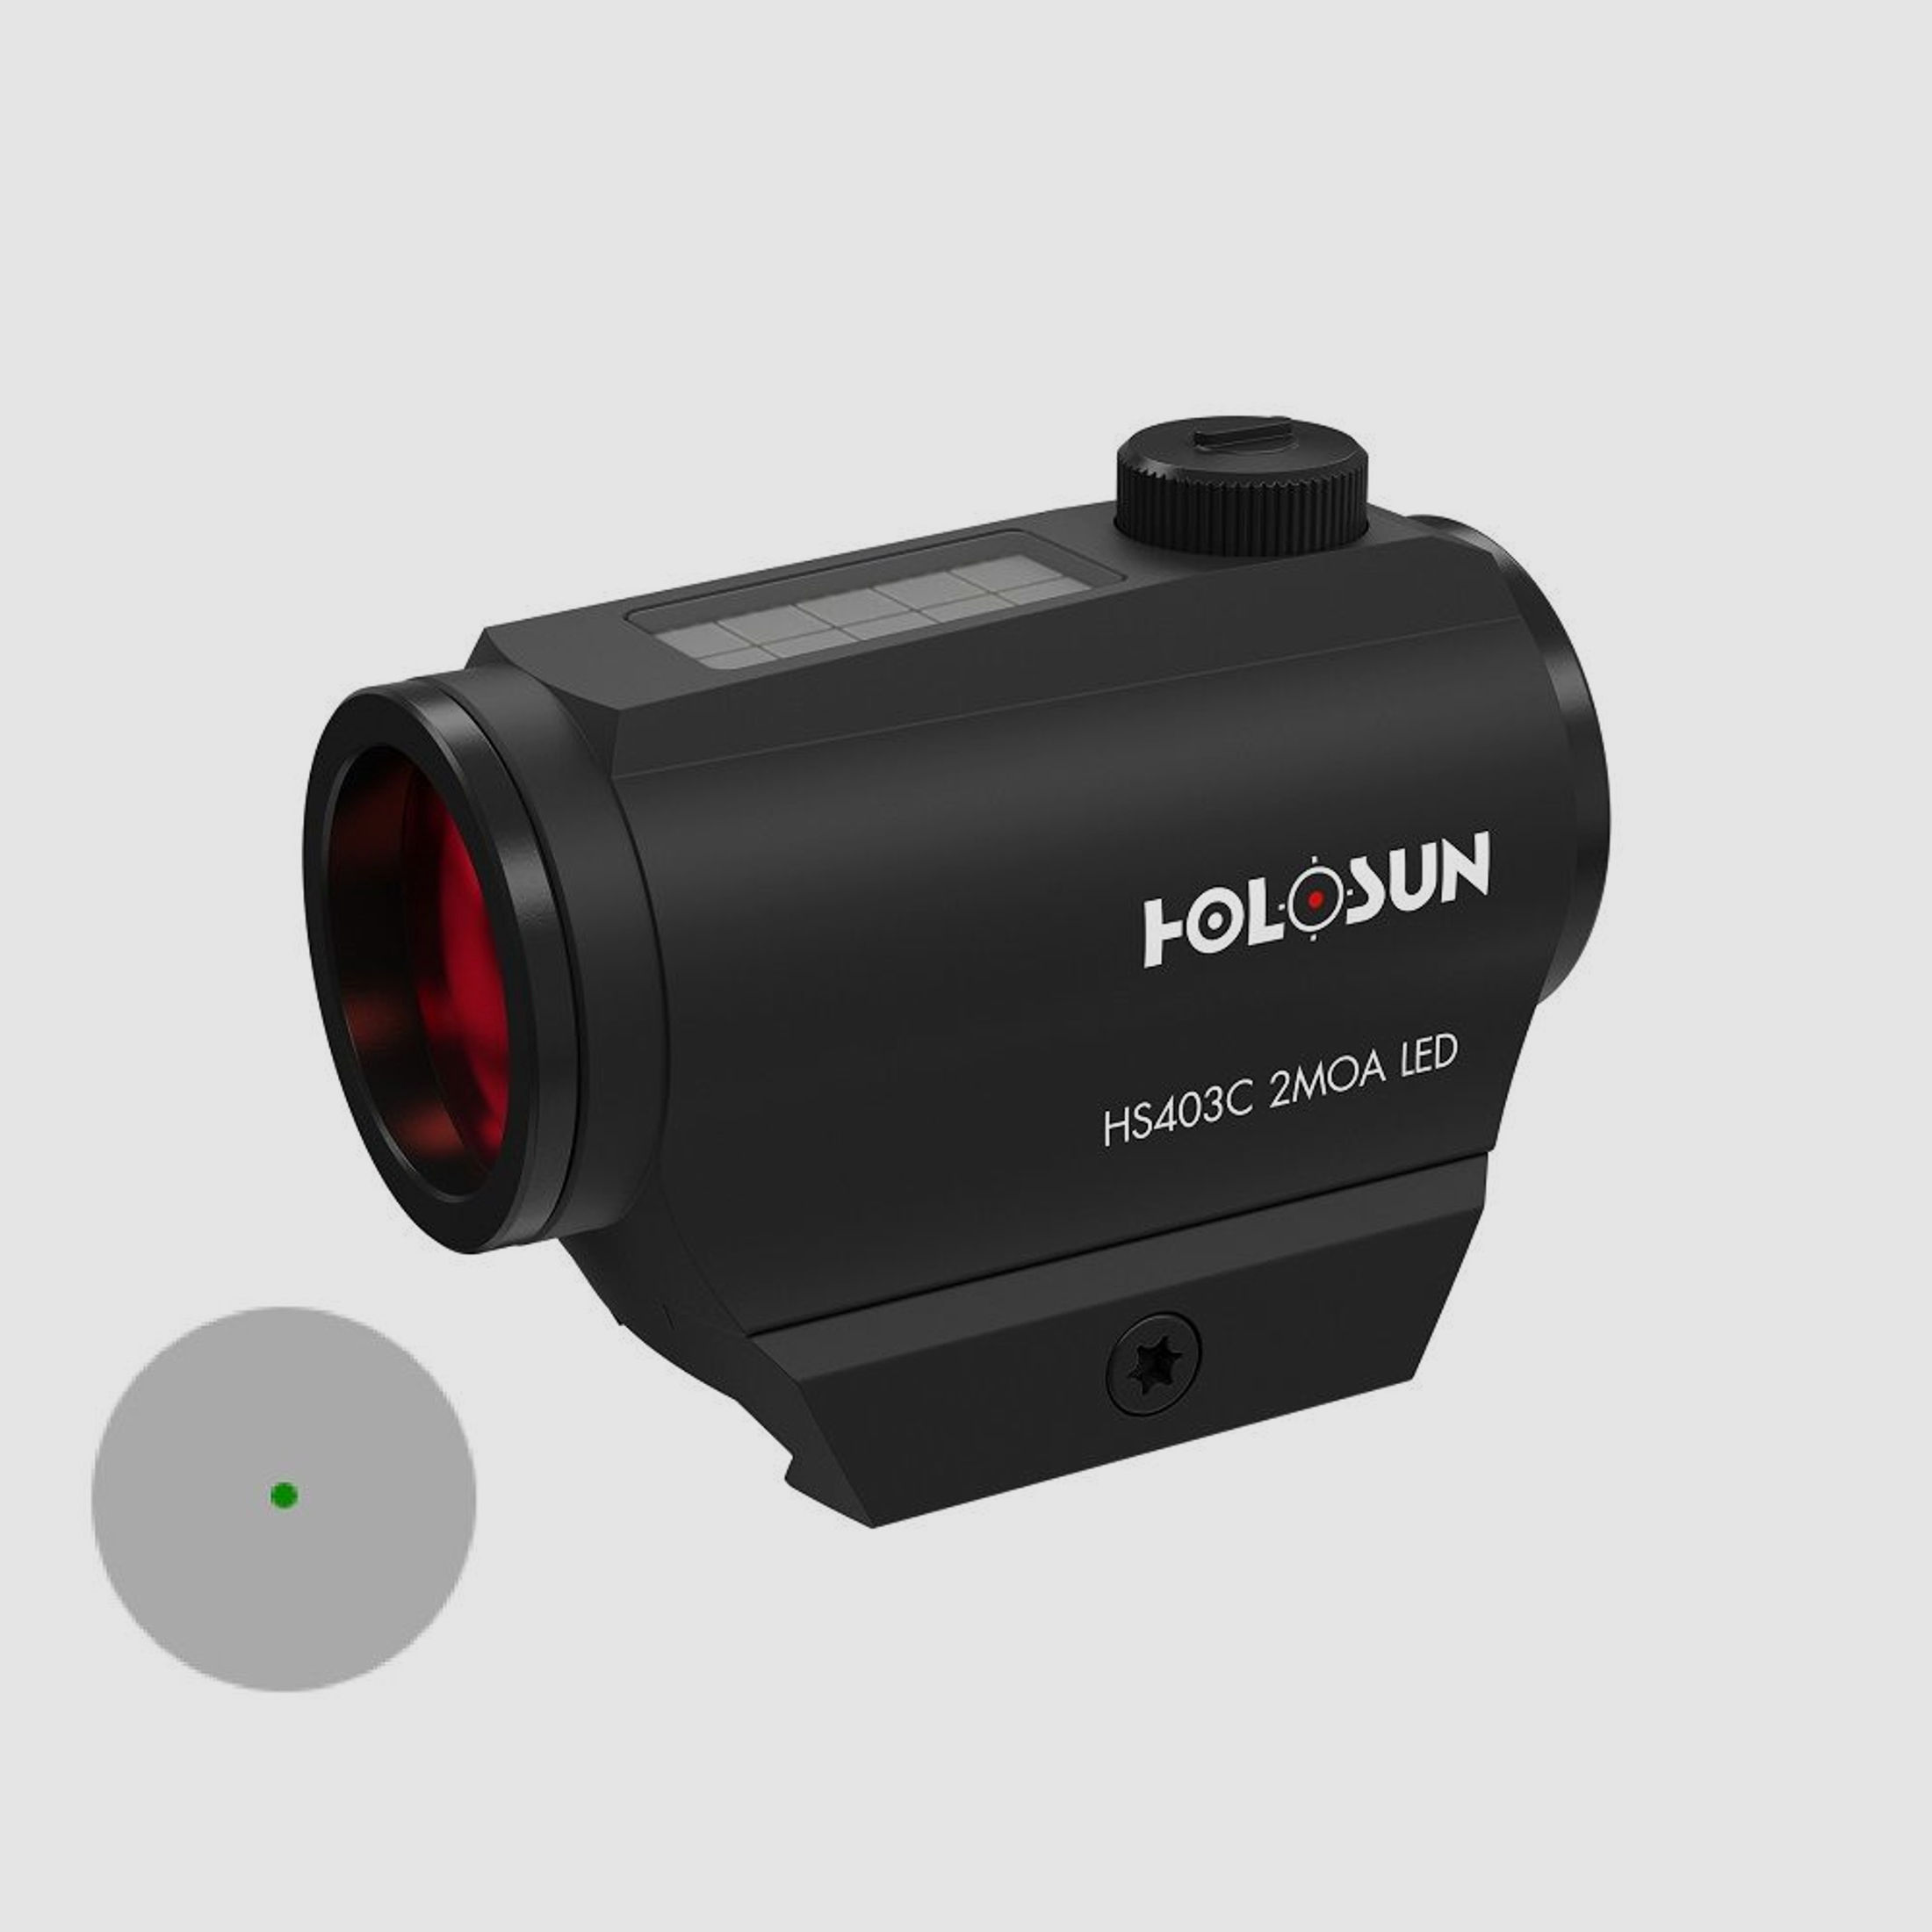 Holosun HE403C-GR Leuchtpunktvisier